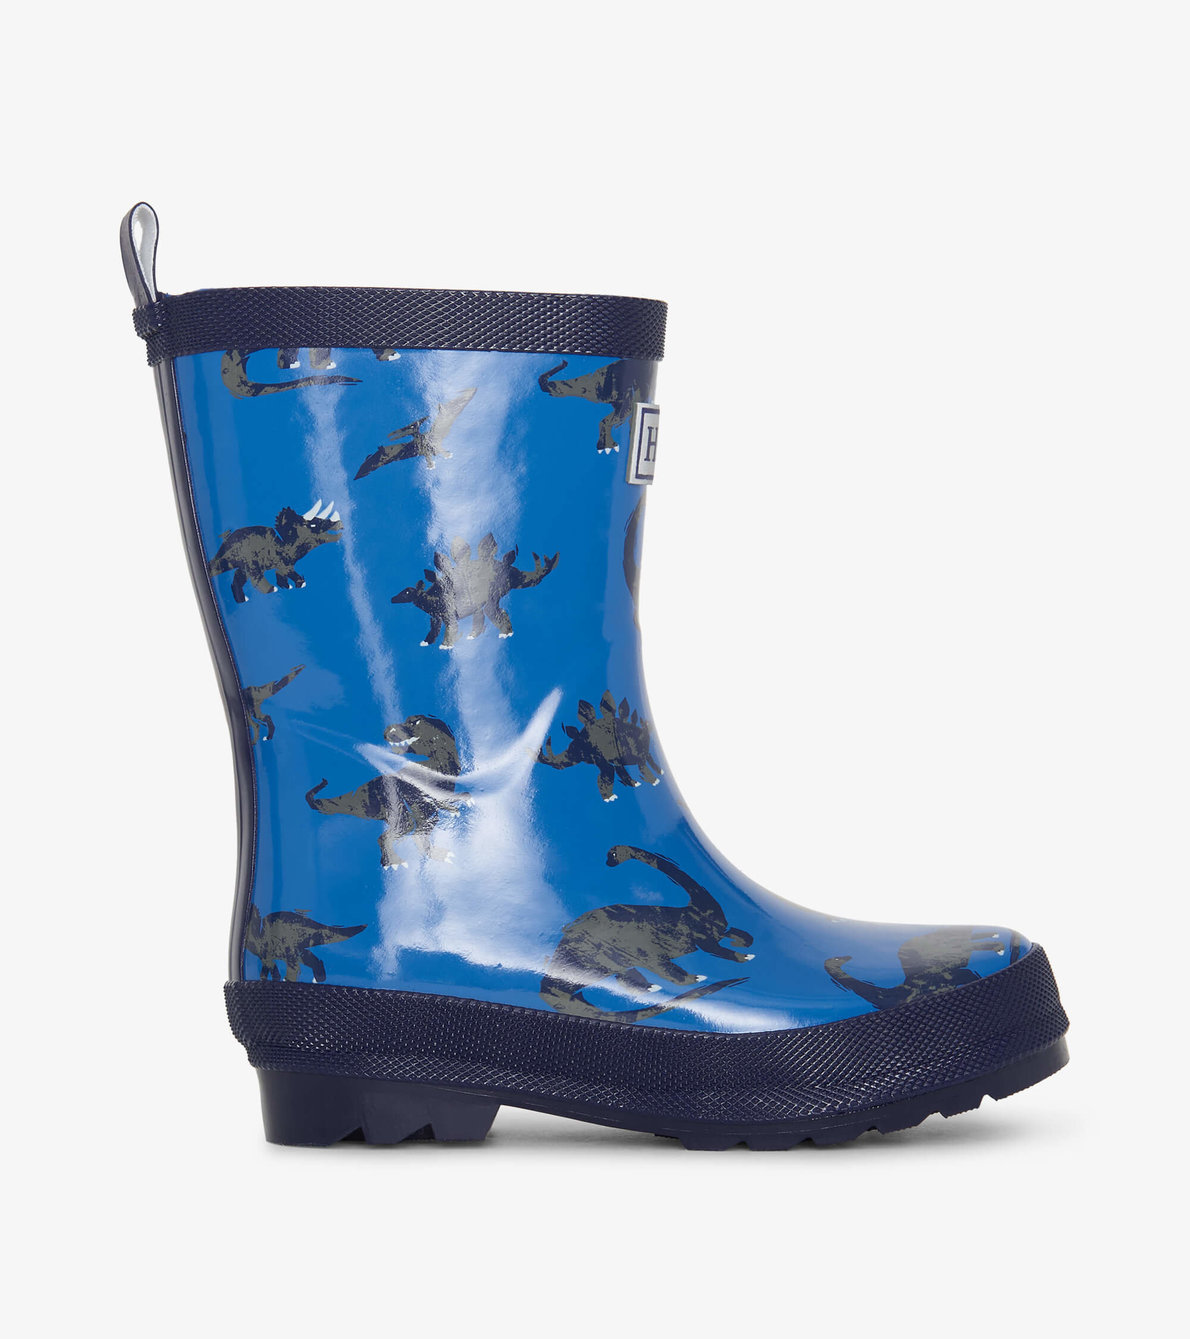 View larger image of Boys Dinosaur Shiny Rain Boots